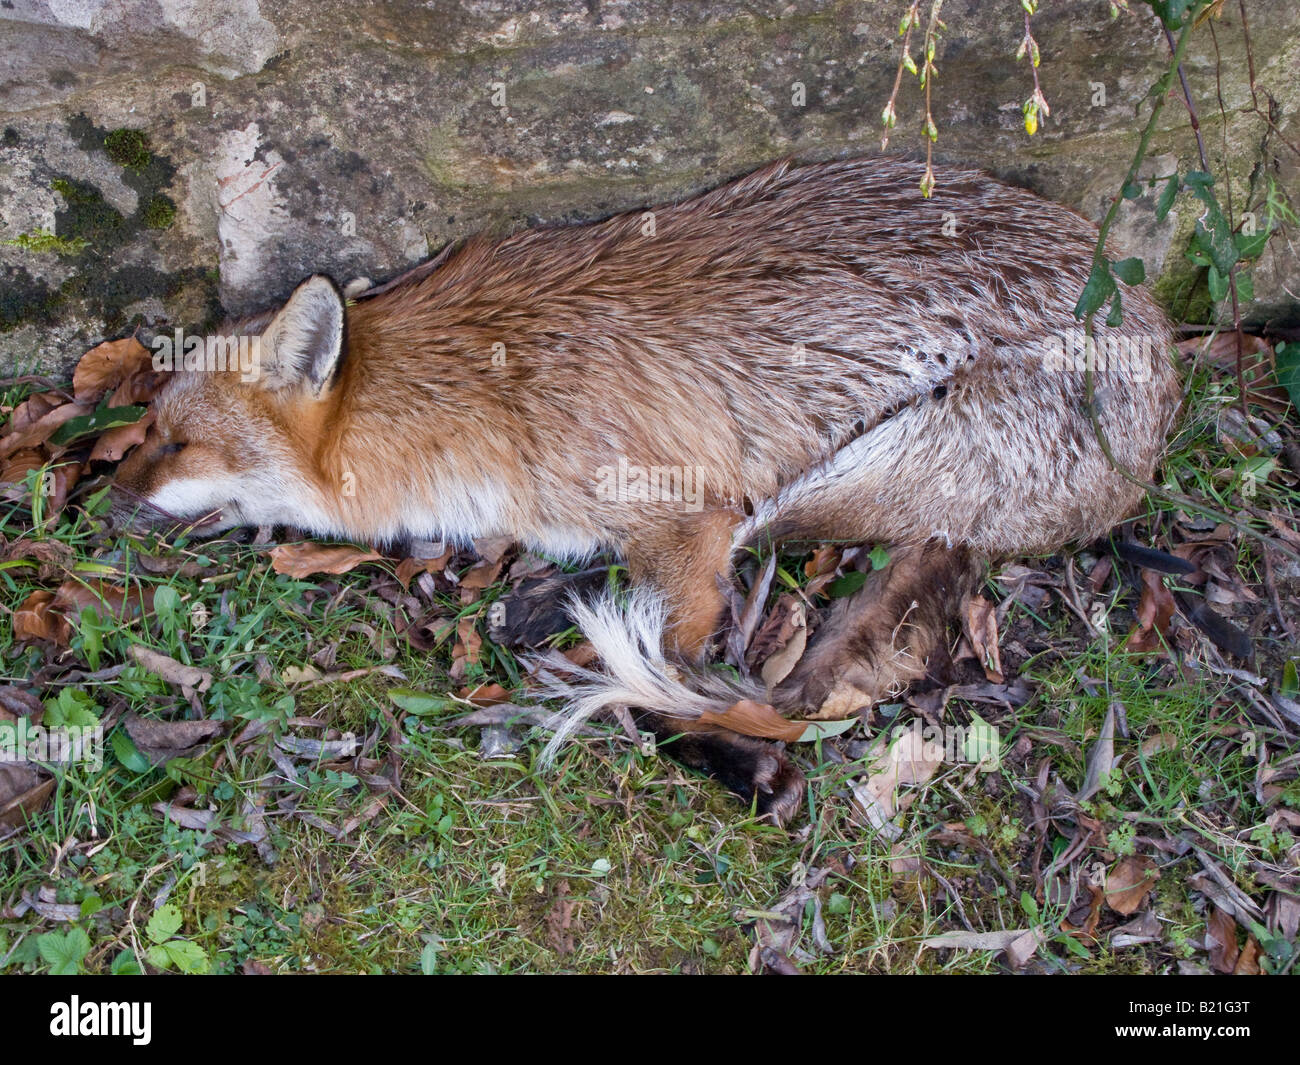 DEAD FOX IN GARDEN Stock Photo - Alamy